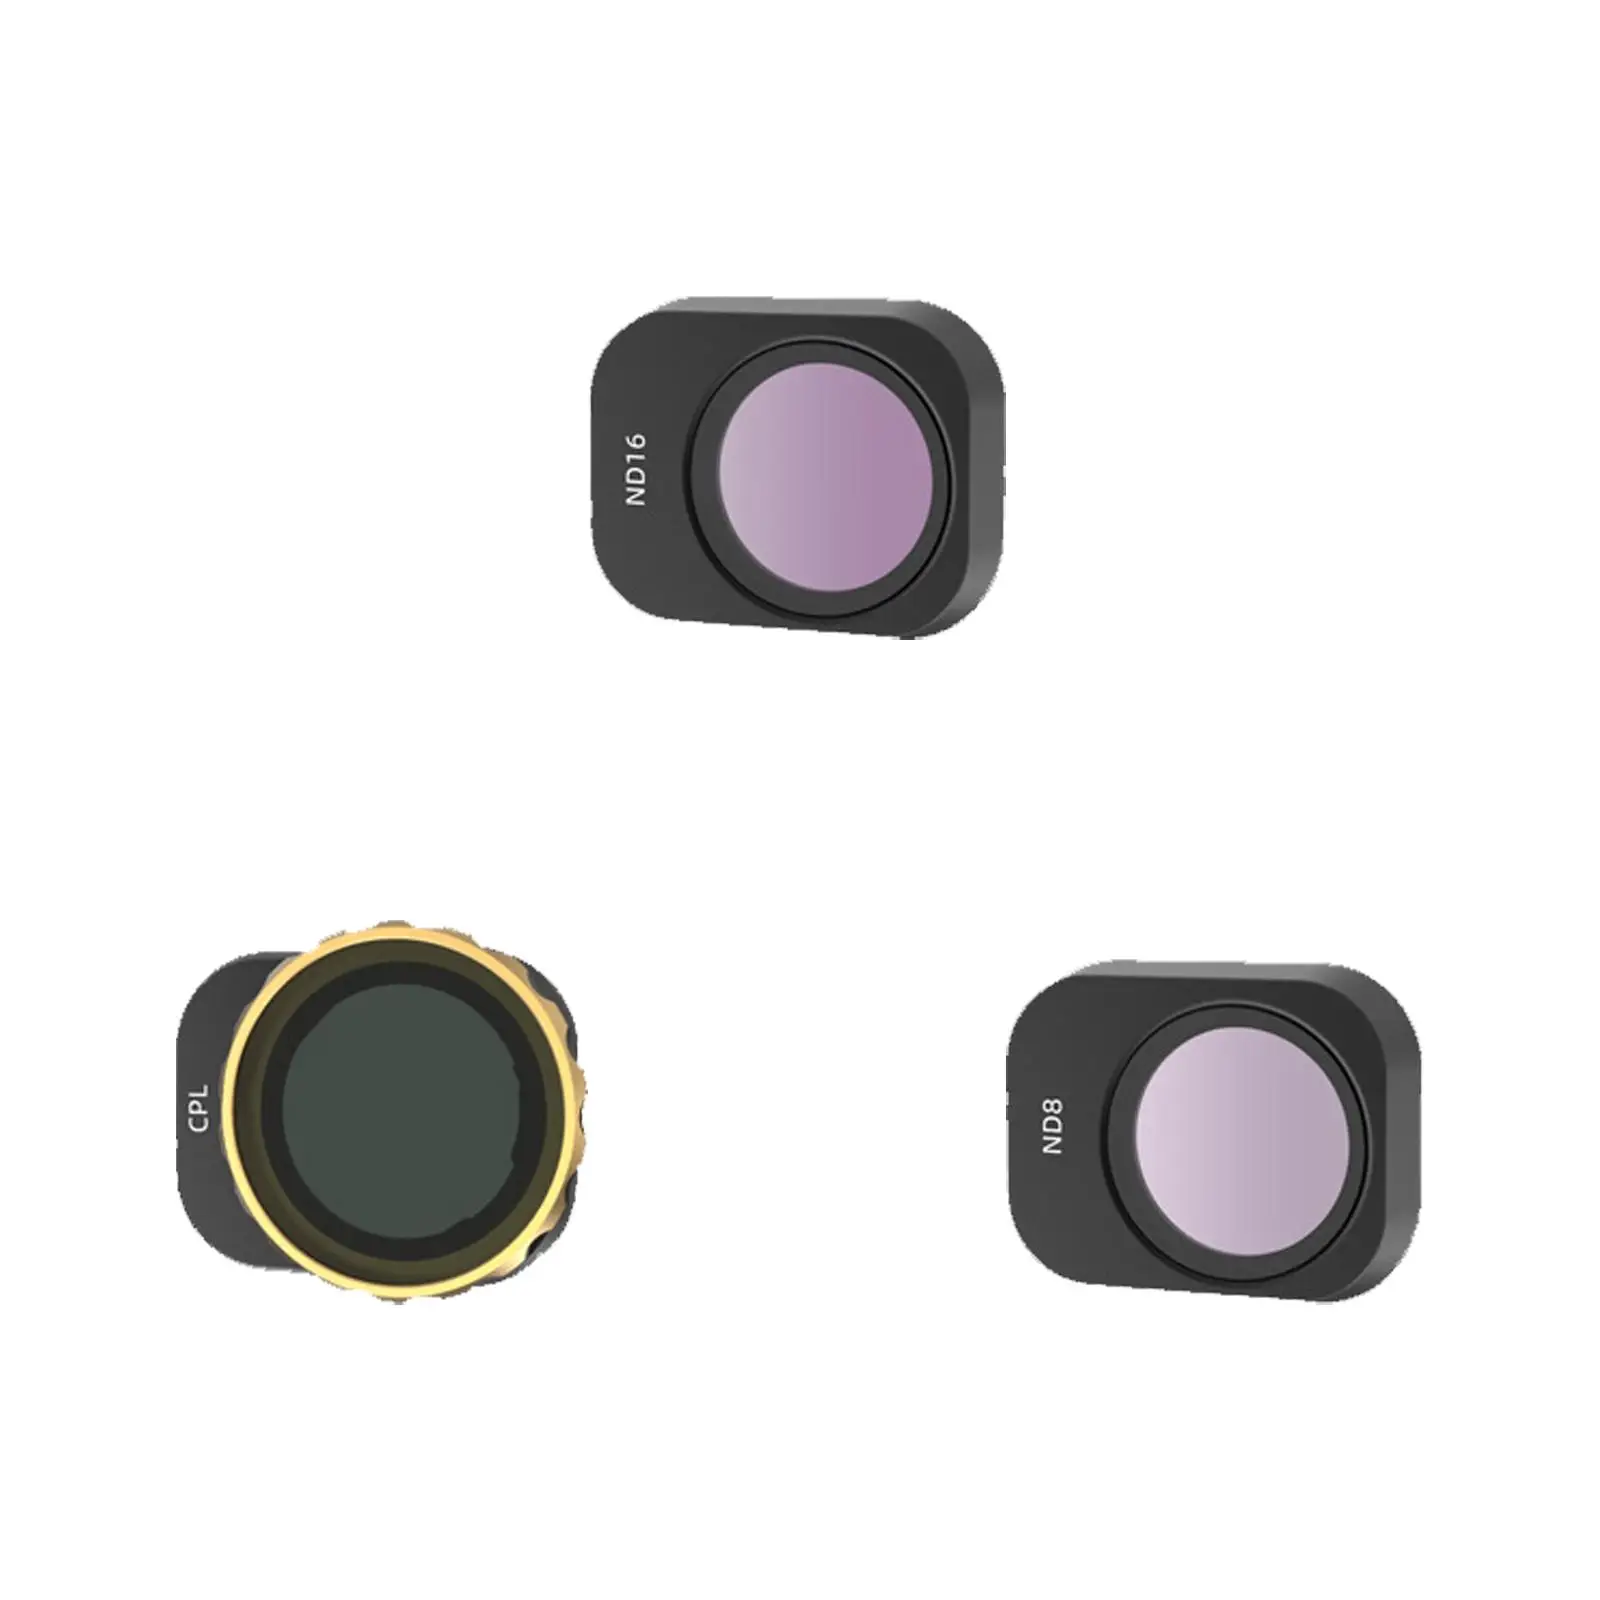 Lens Filter Reduce Shutter Speed Accs Dustproof Anti Scratch Coating for DJI Drone Camera